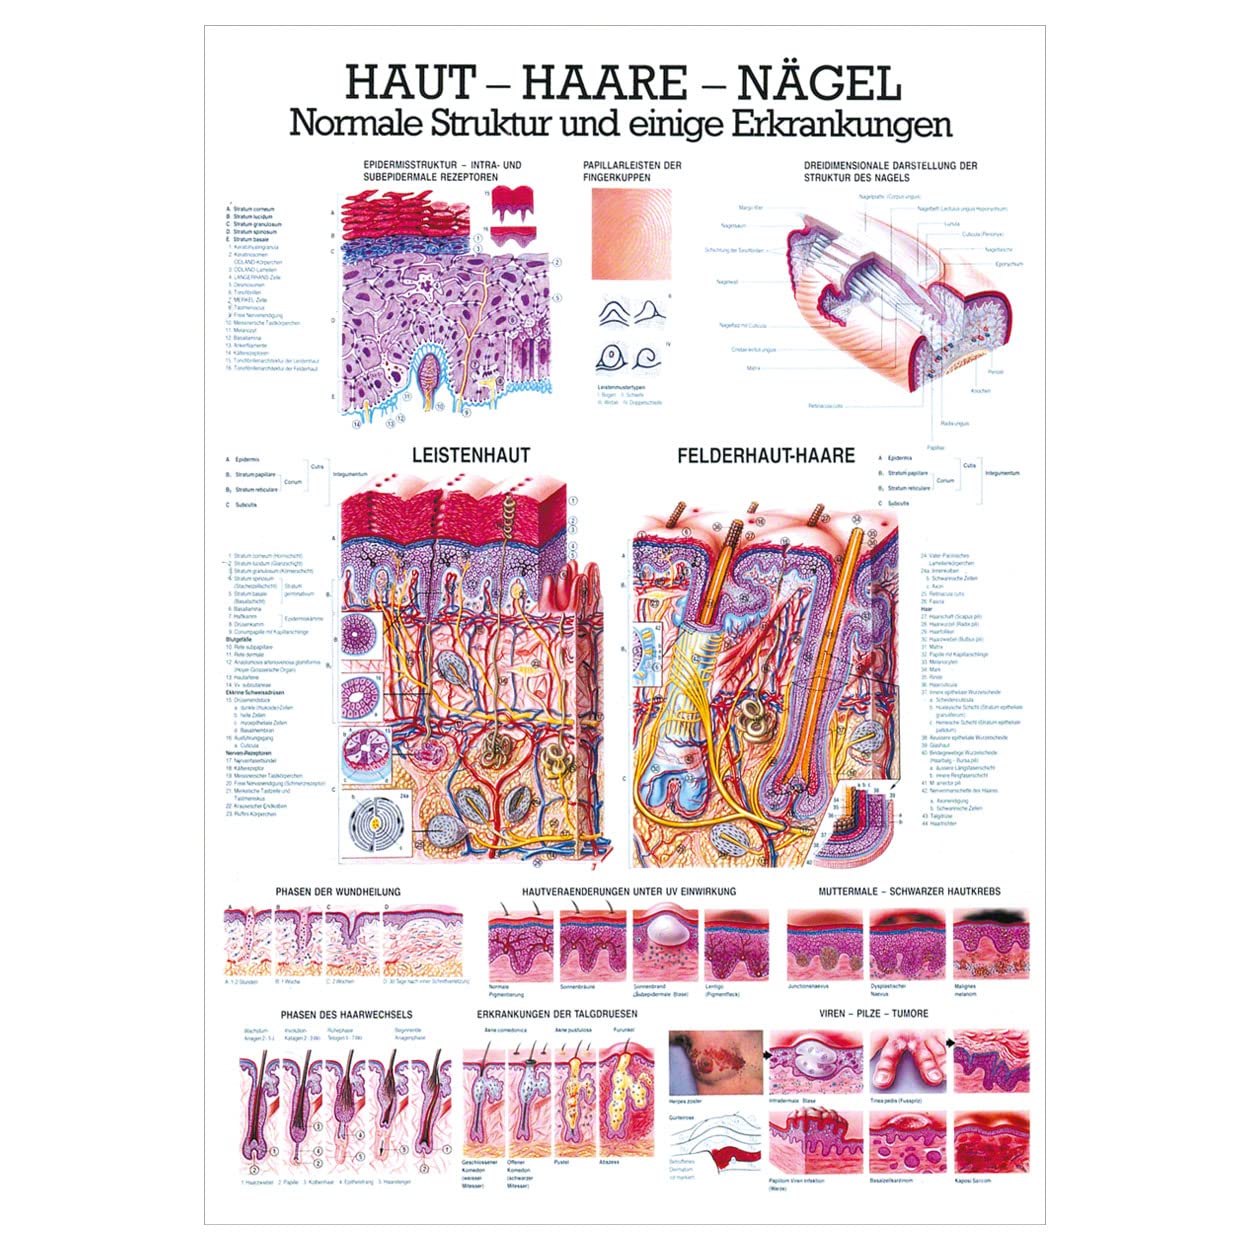 Rüdiger Haut-Haare-Nägel Lehrtafel Anatomie 100x70 cm medizinische Lehrmittel